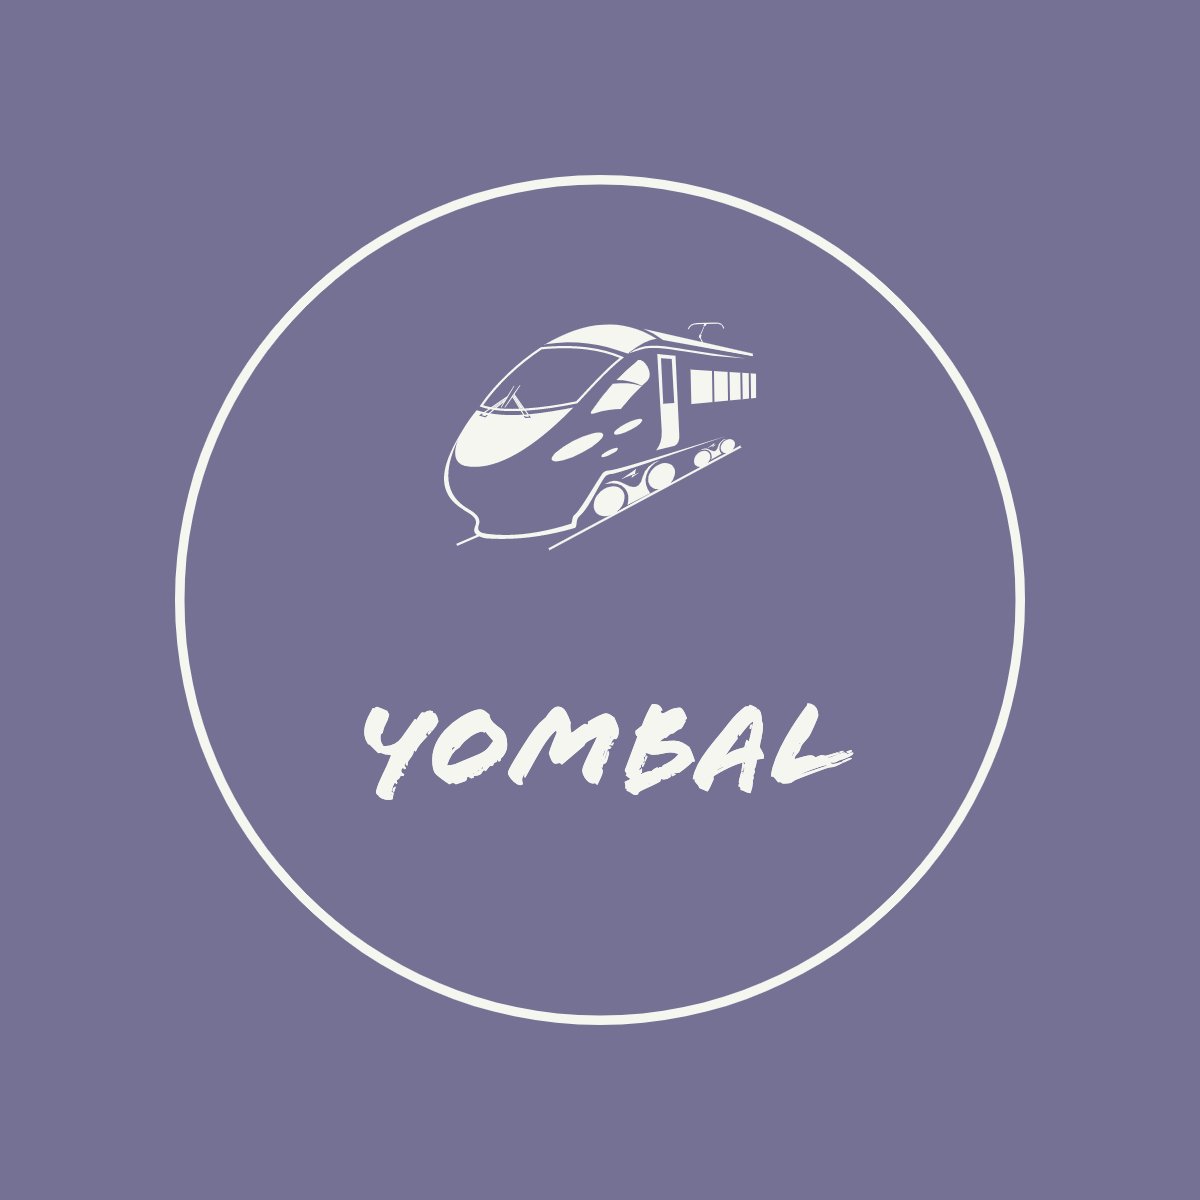 Yombal